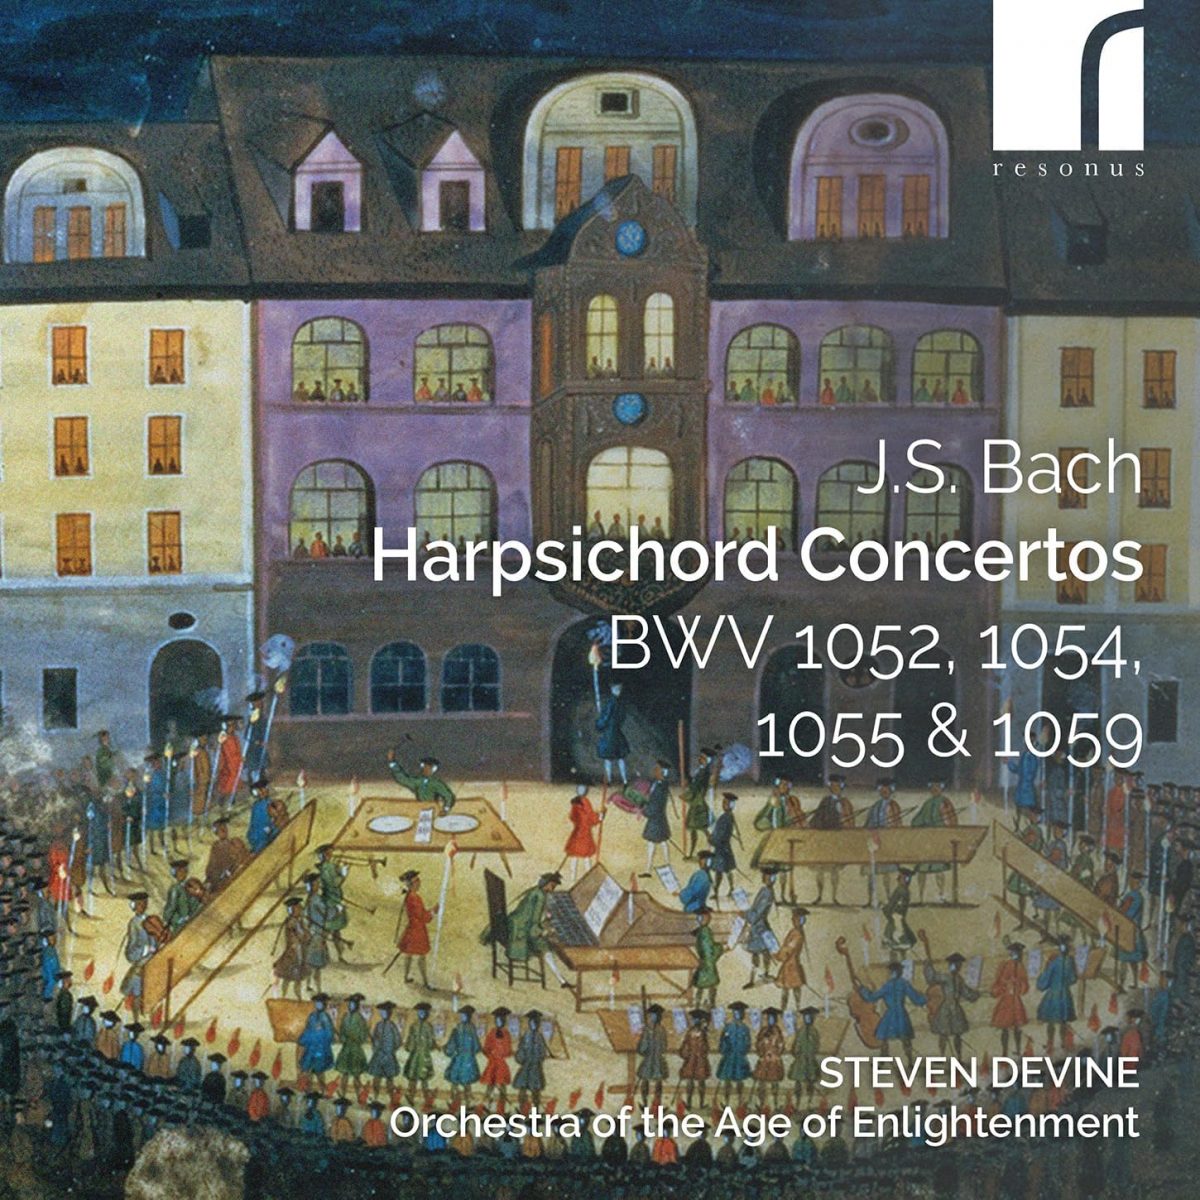 CD cover Bach harpsichord Concertos Steven Devine OAE Resonus